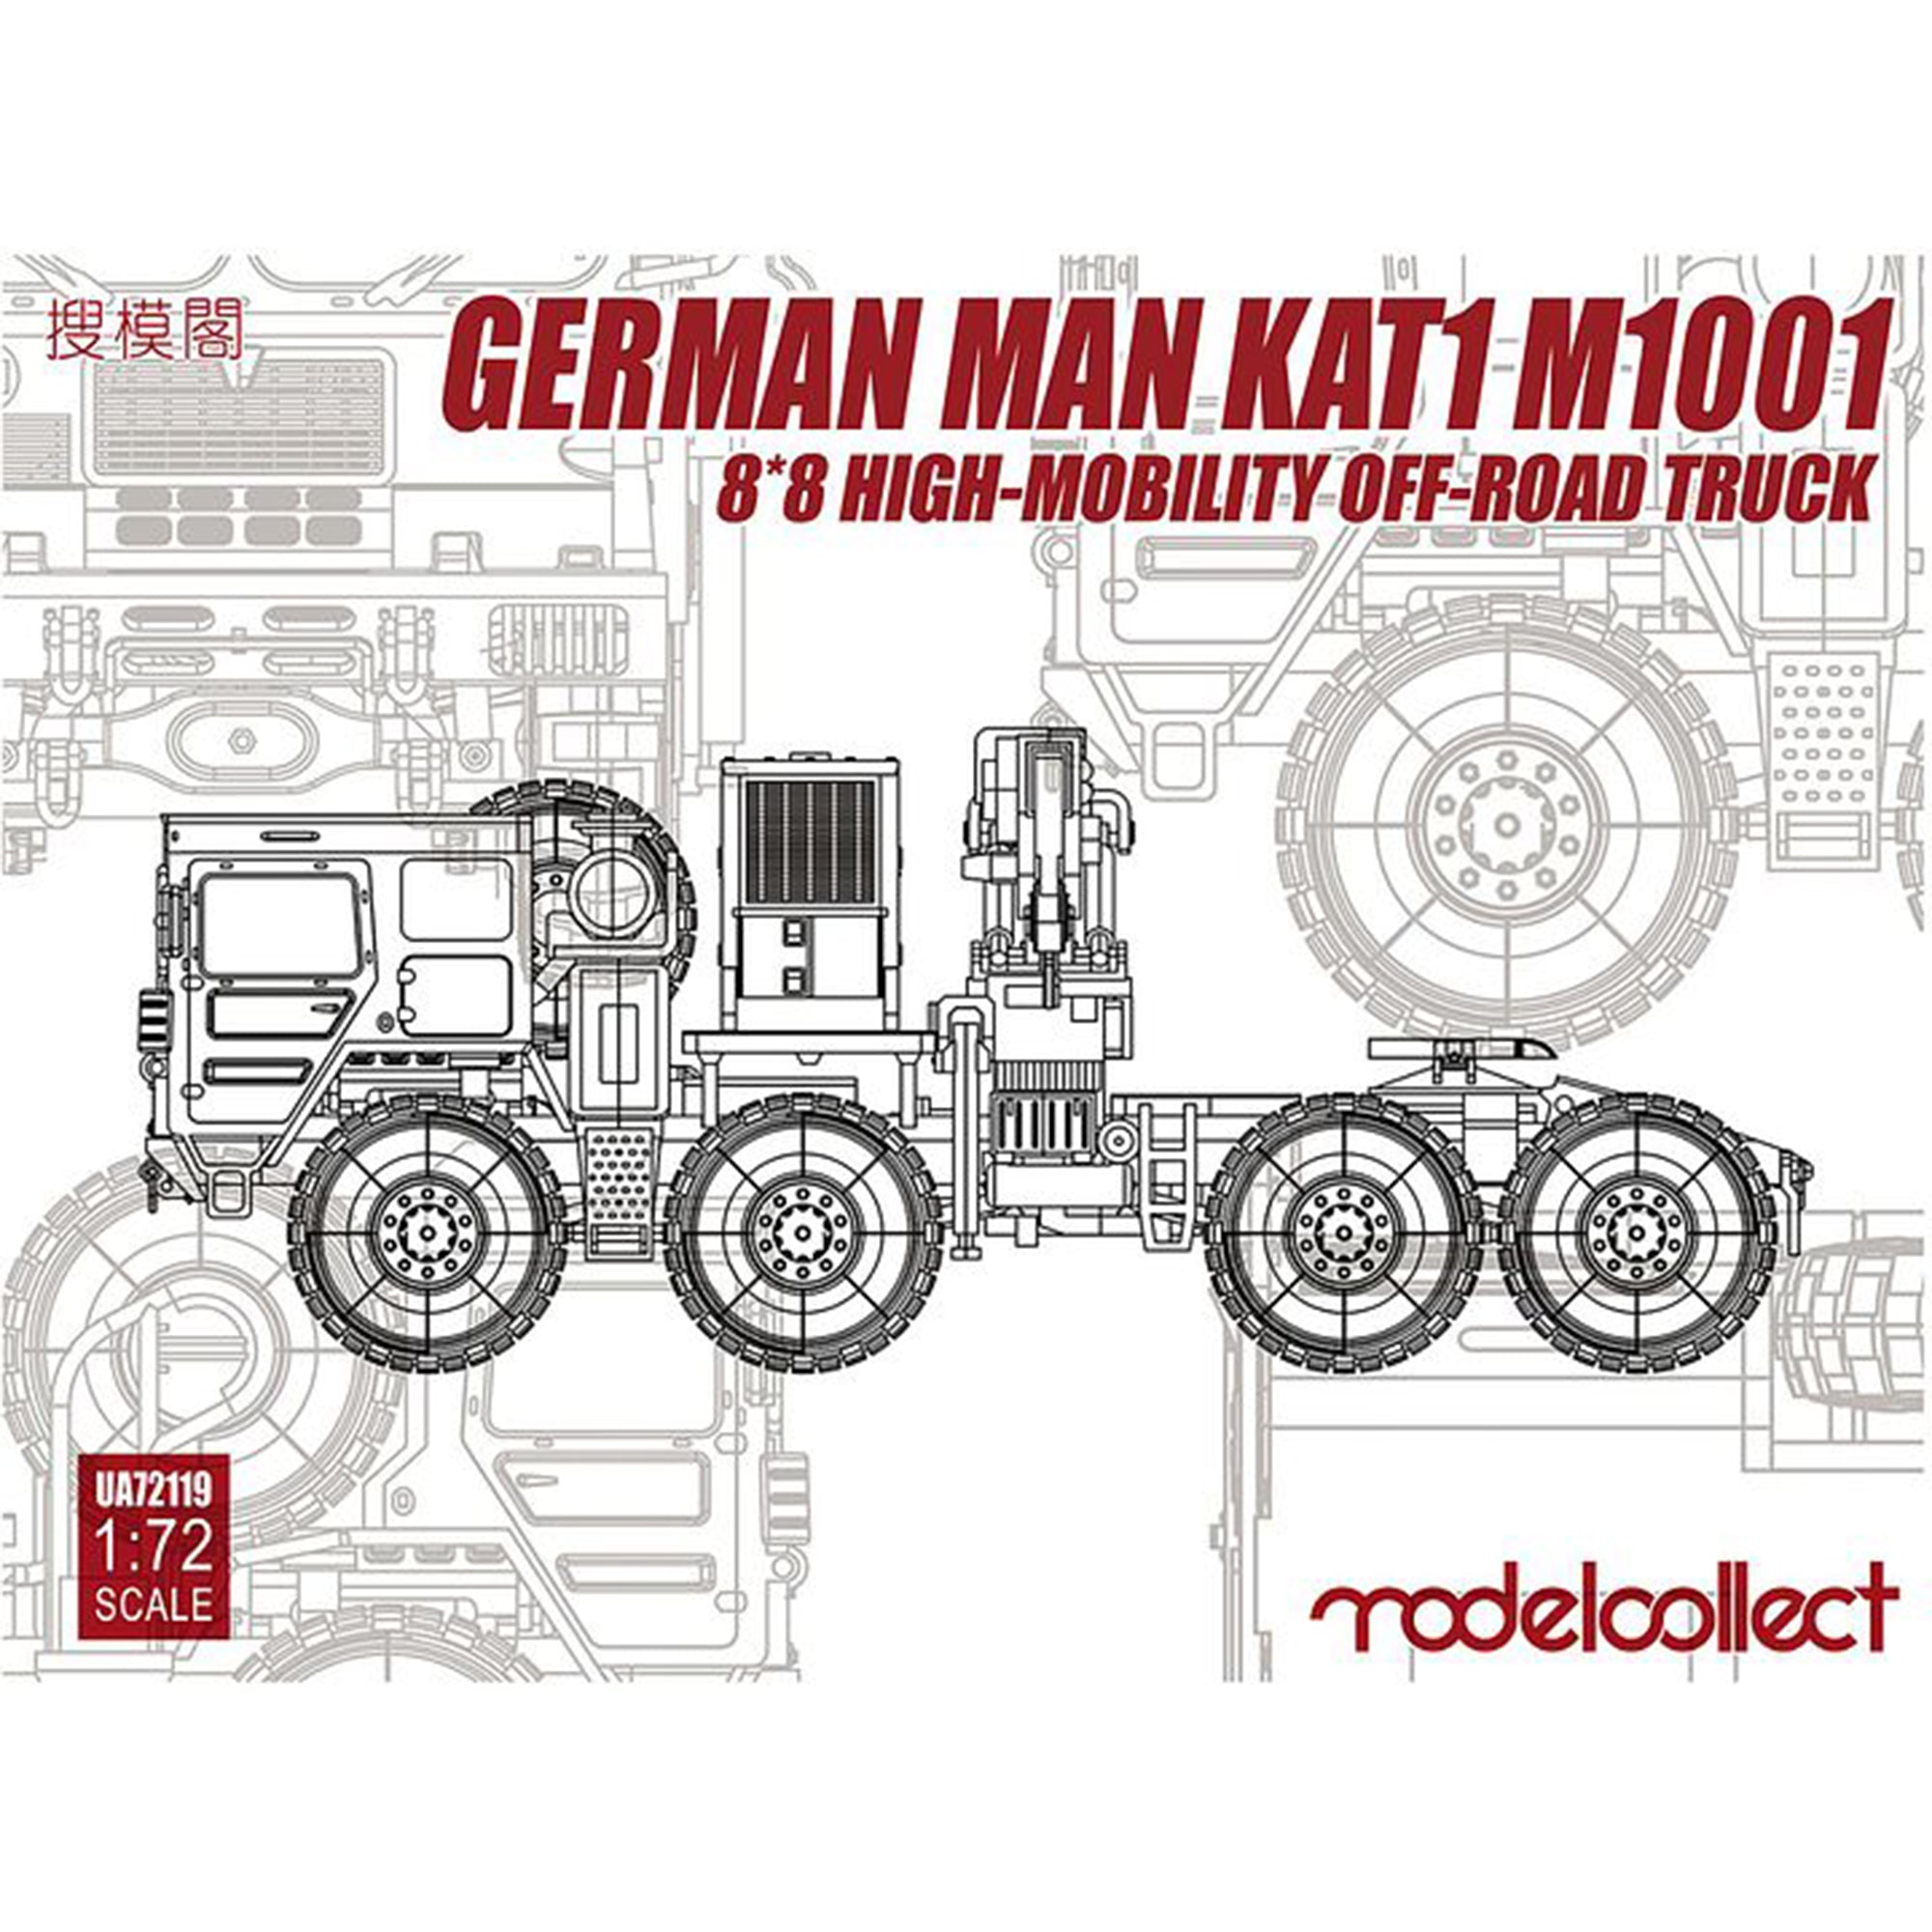 Modelcollect UA72119 1/72 German MAN KAT1 M1001 High-Mobility Off-Road Truck Model Kit (8*8)